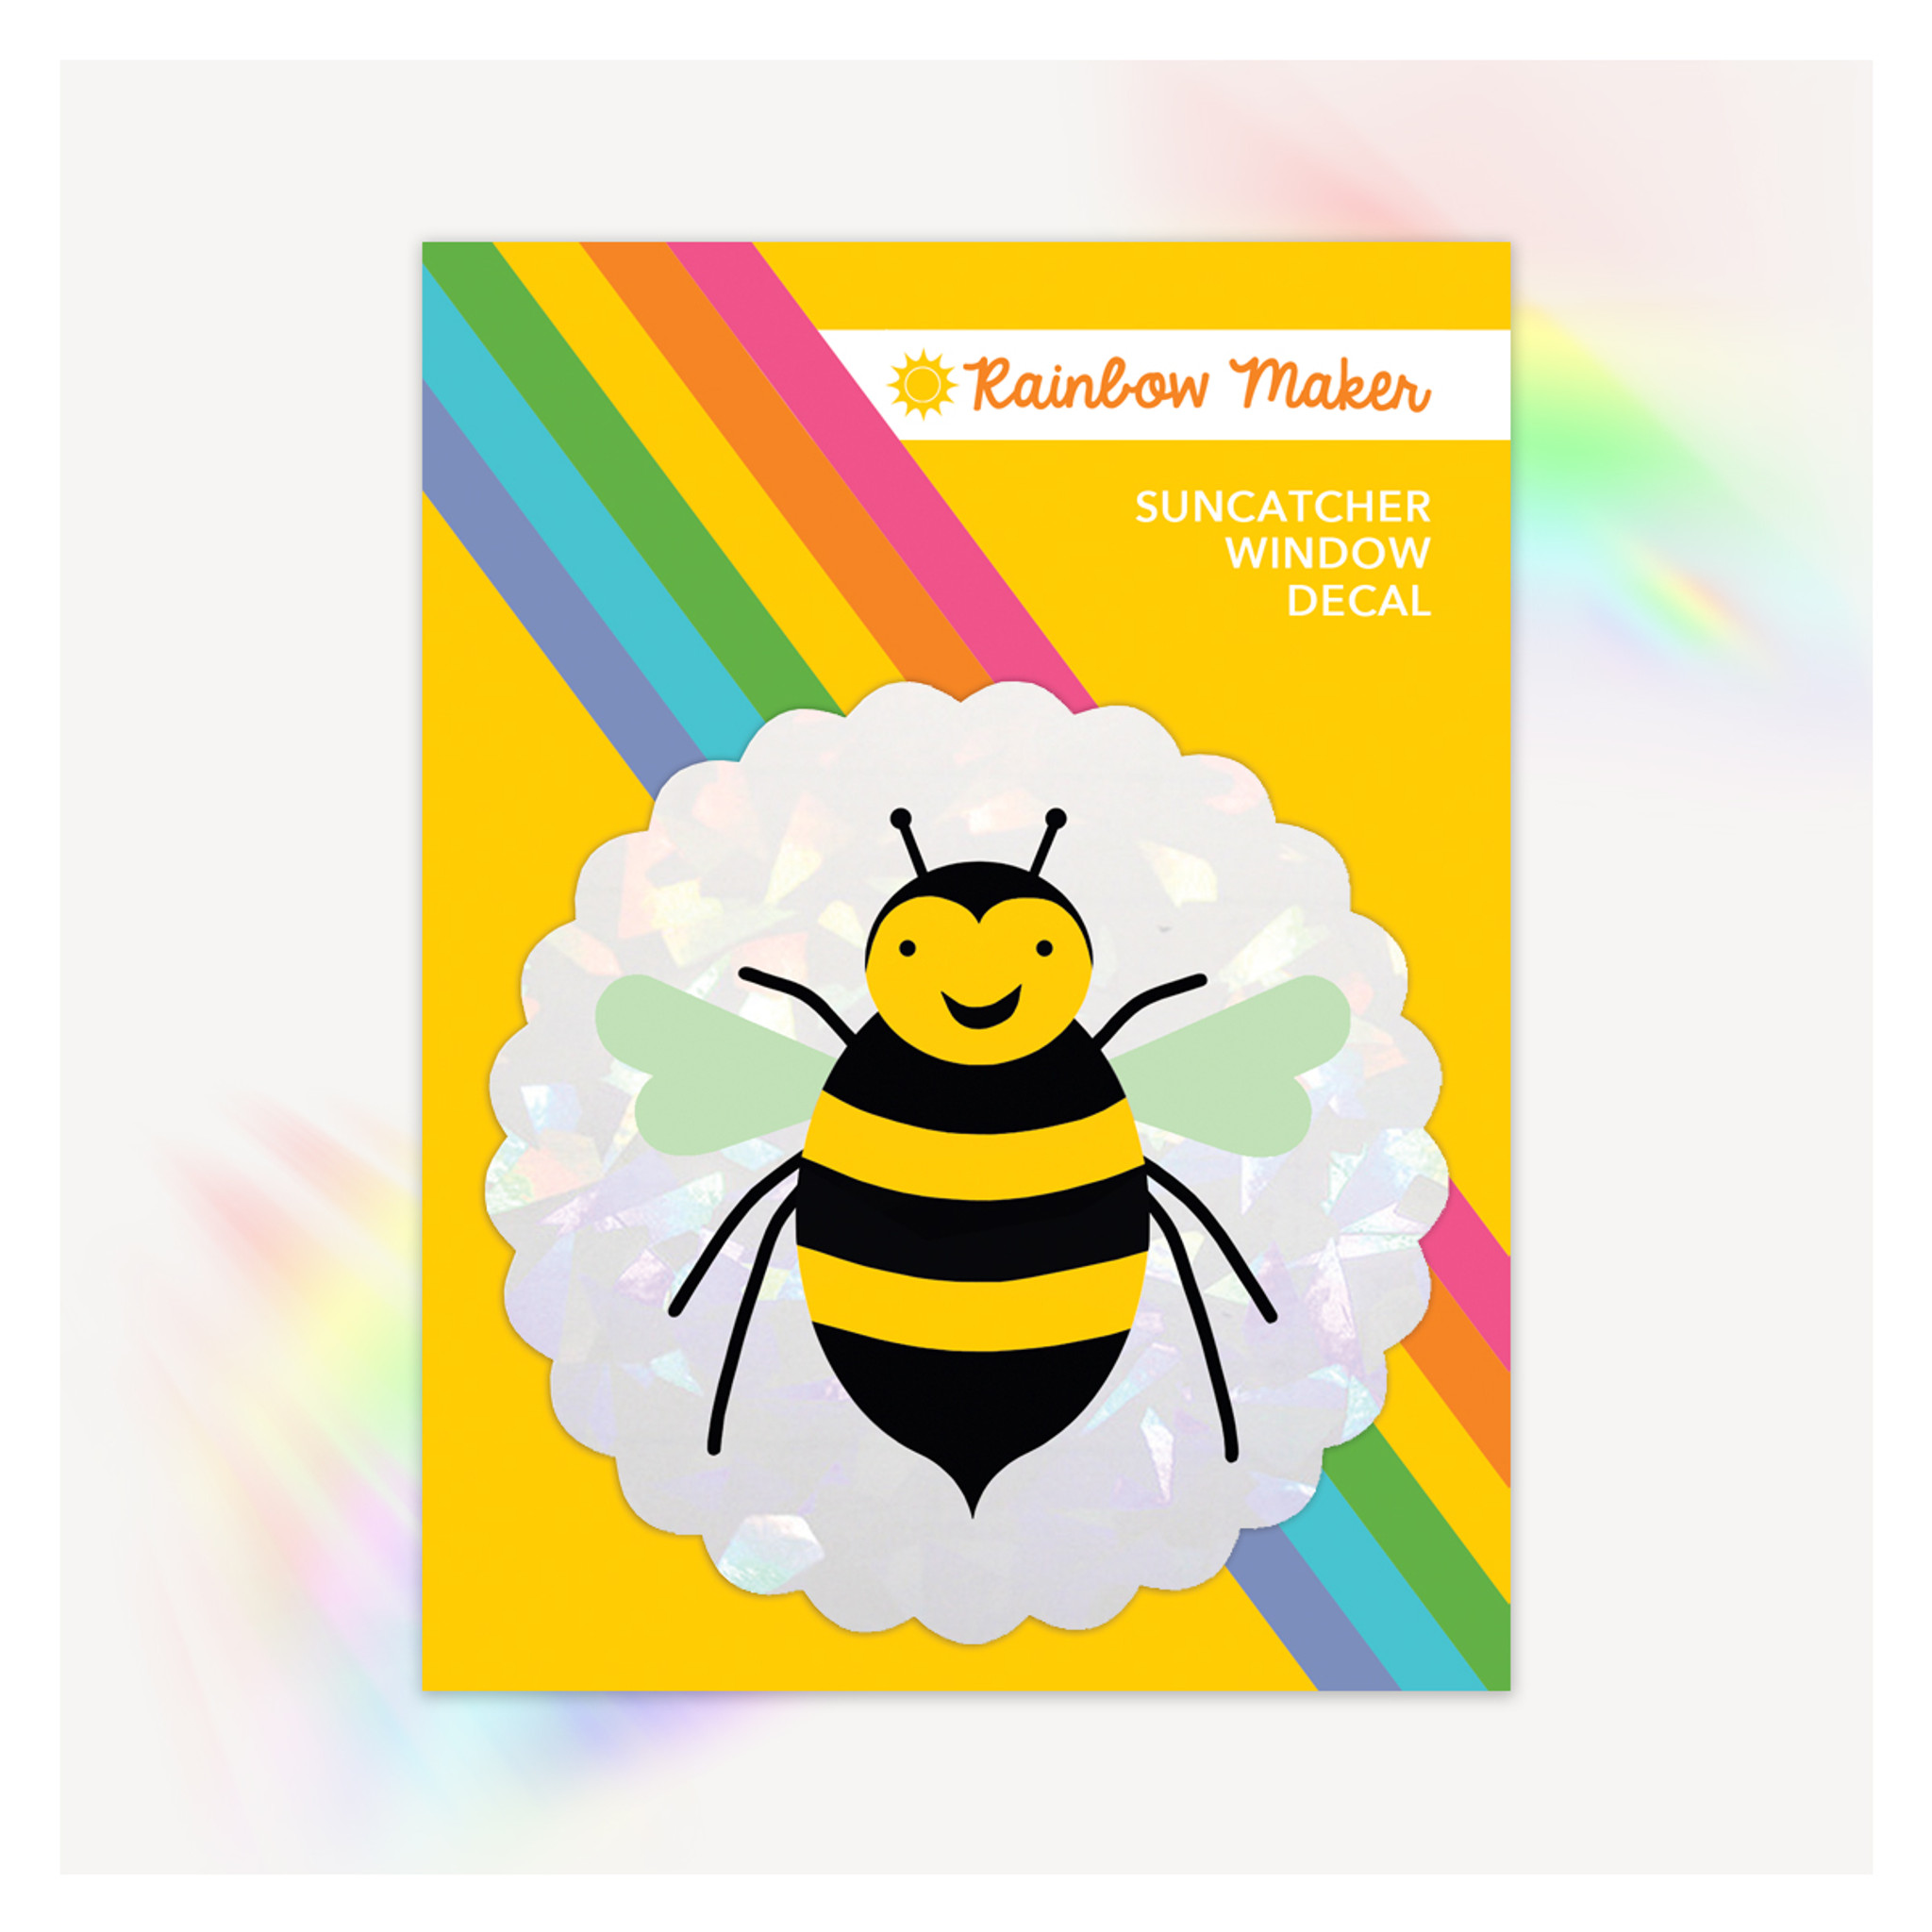 Bumble Bee - Rainbow Maker Suncatcher Decal